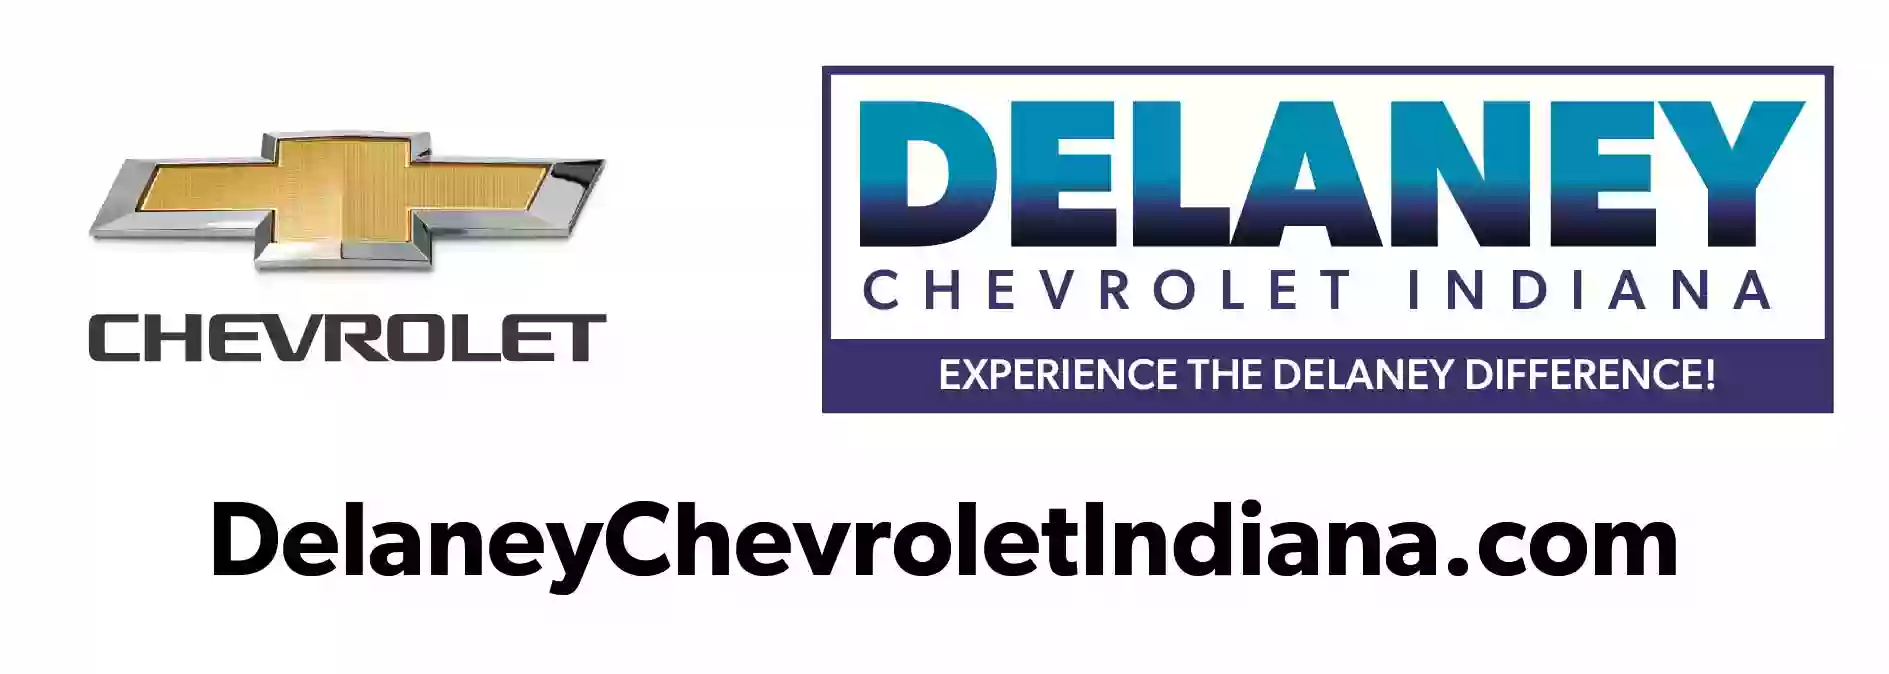 Delaney Chevrolet of Indiana Parts